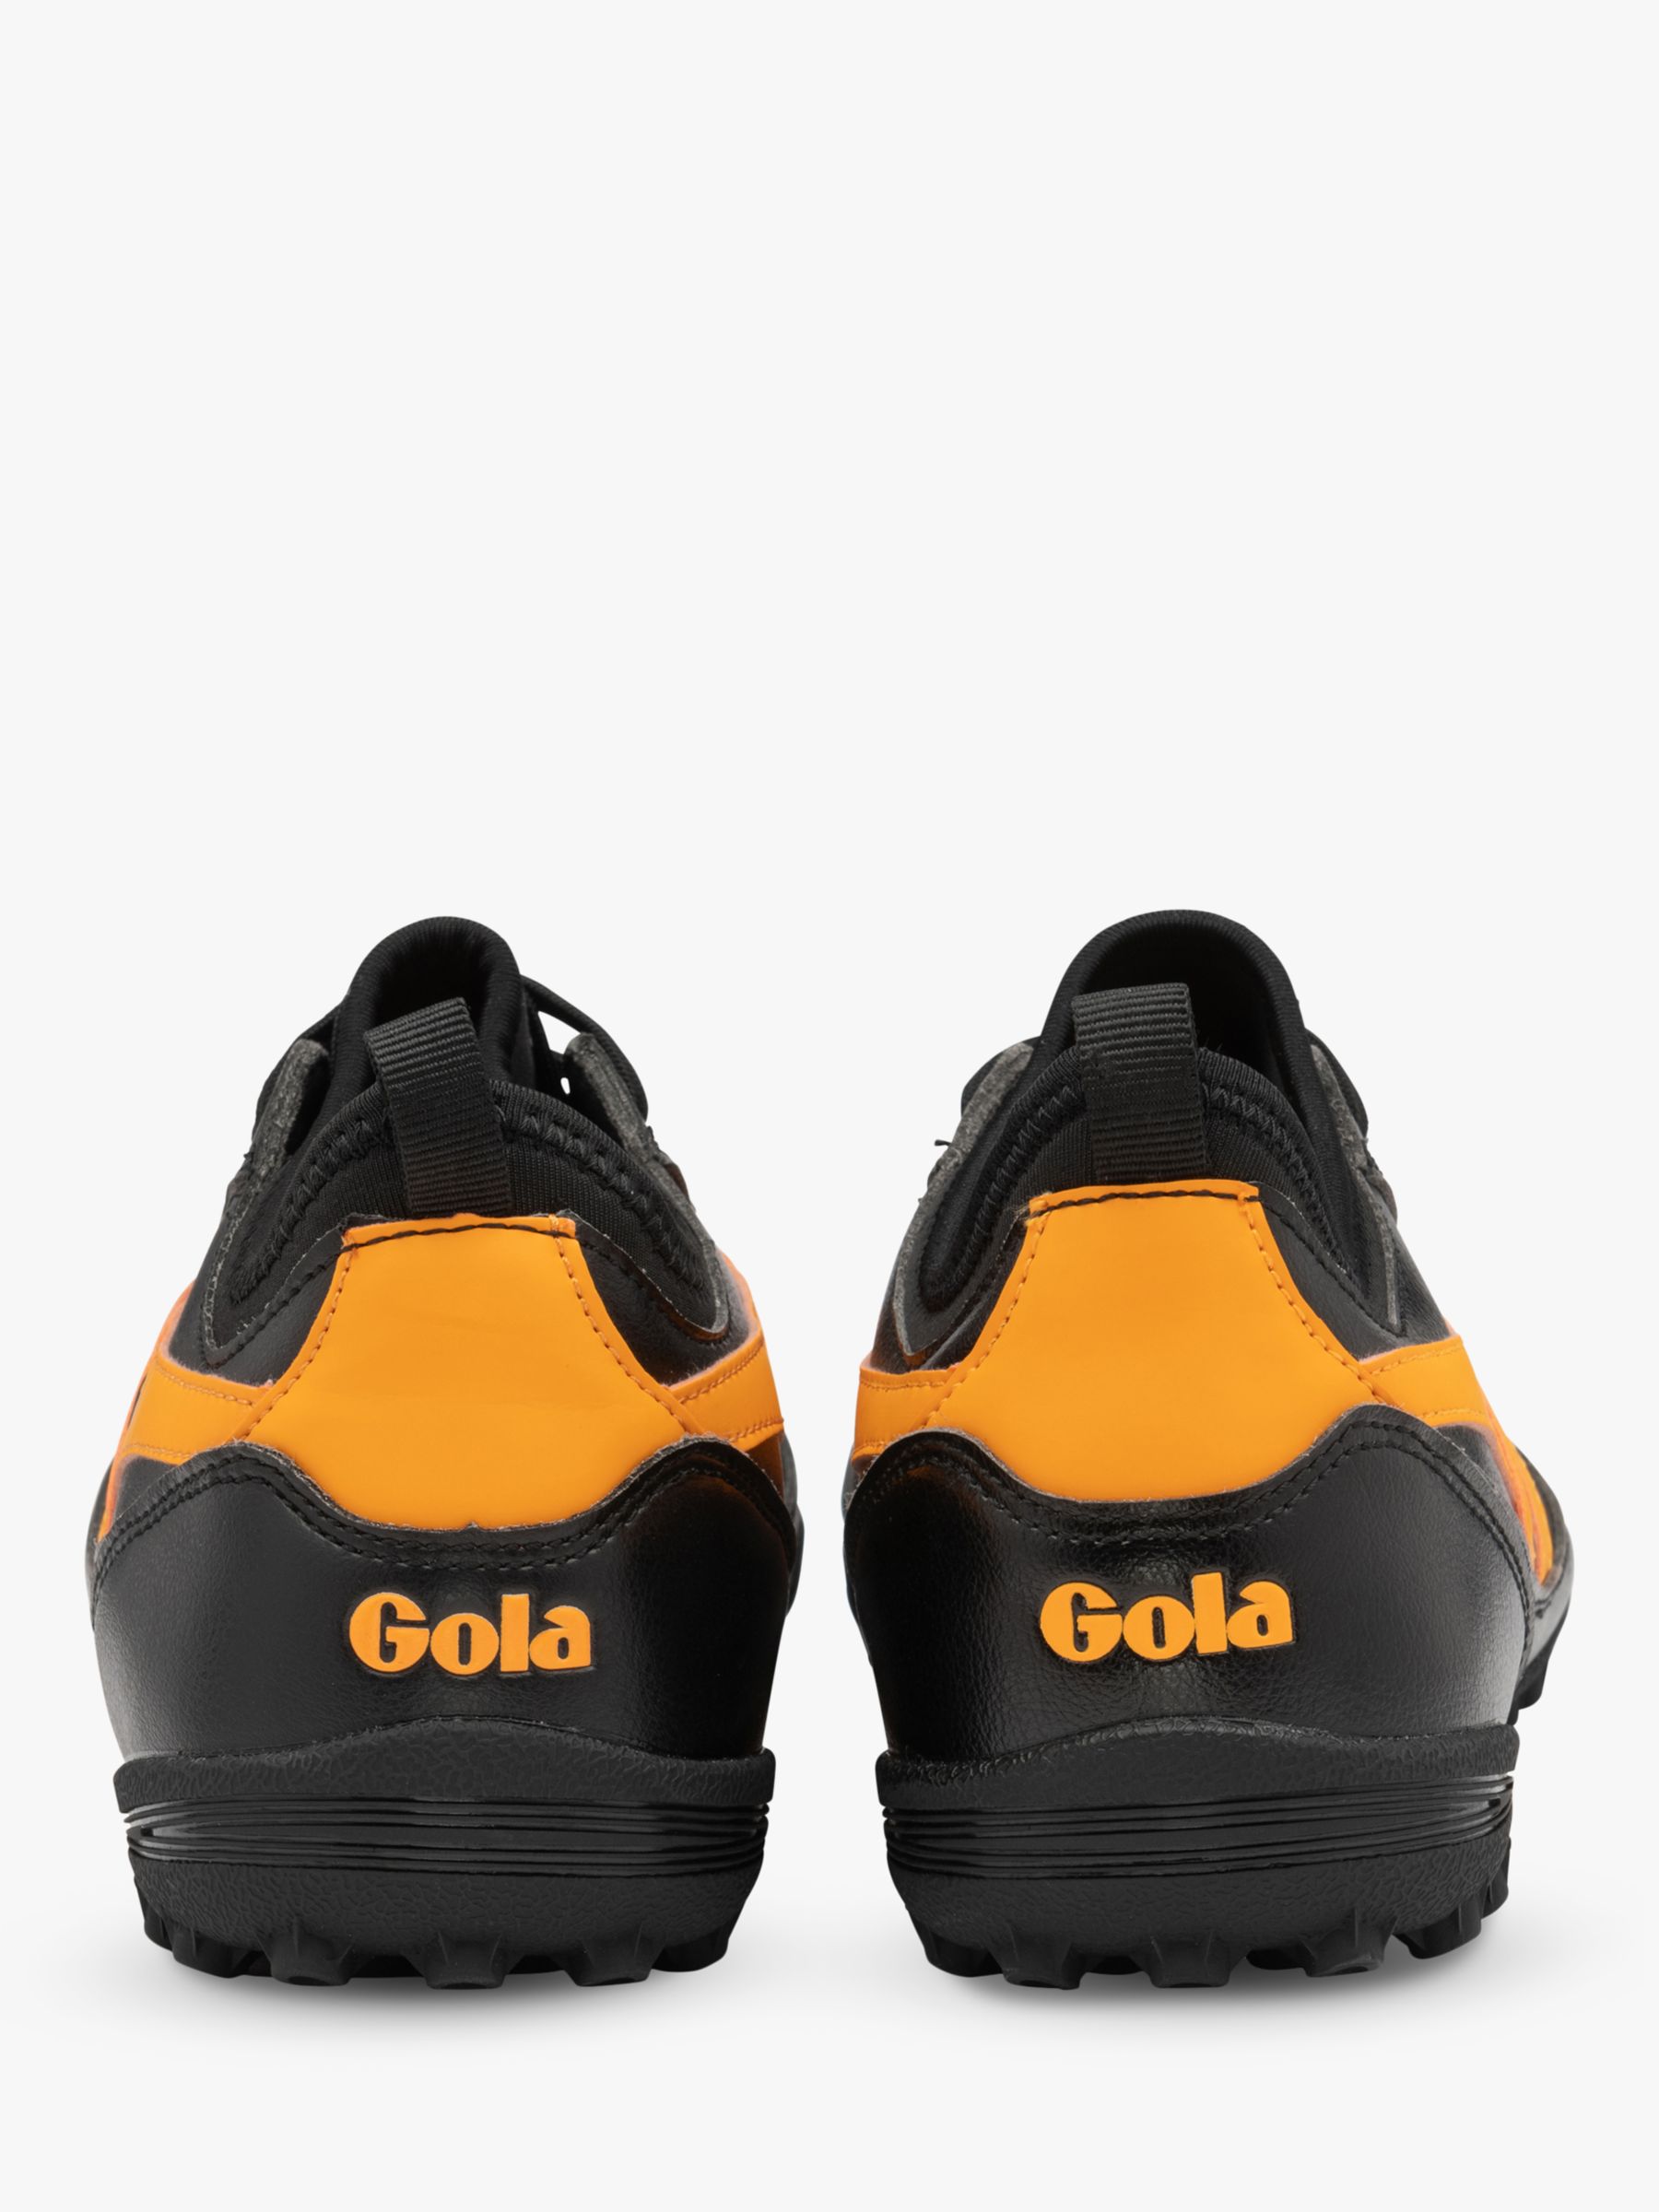 Gola Performance Ceptor MLD Pro Football Boots, Black/Sun, 10